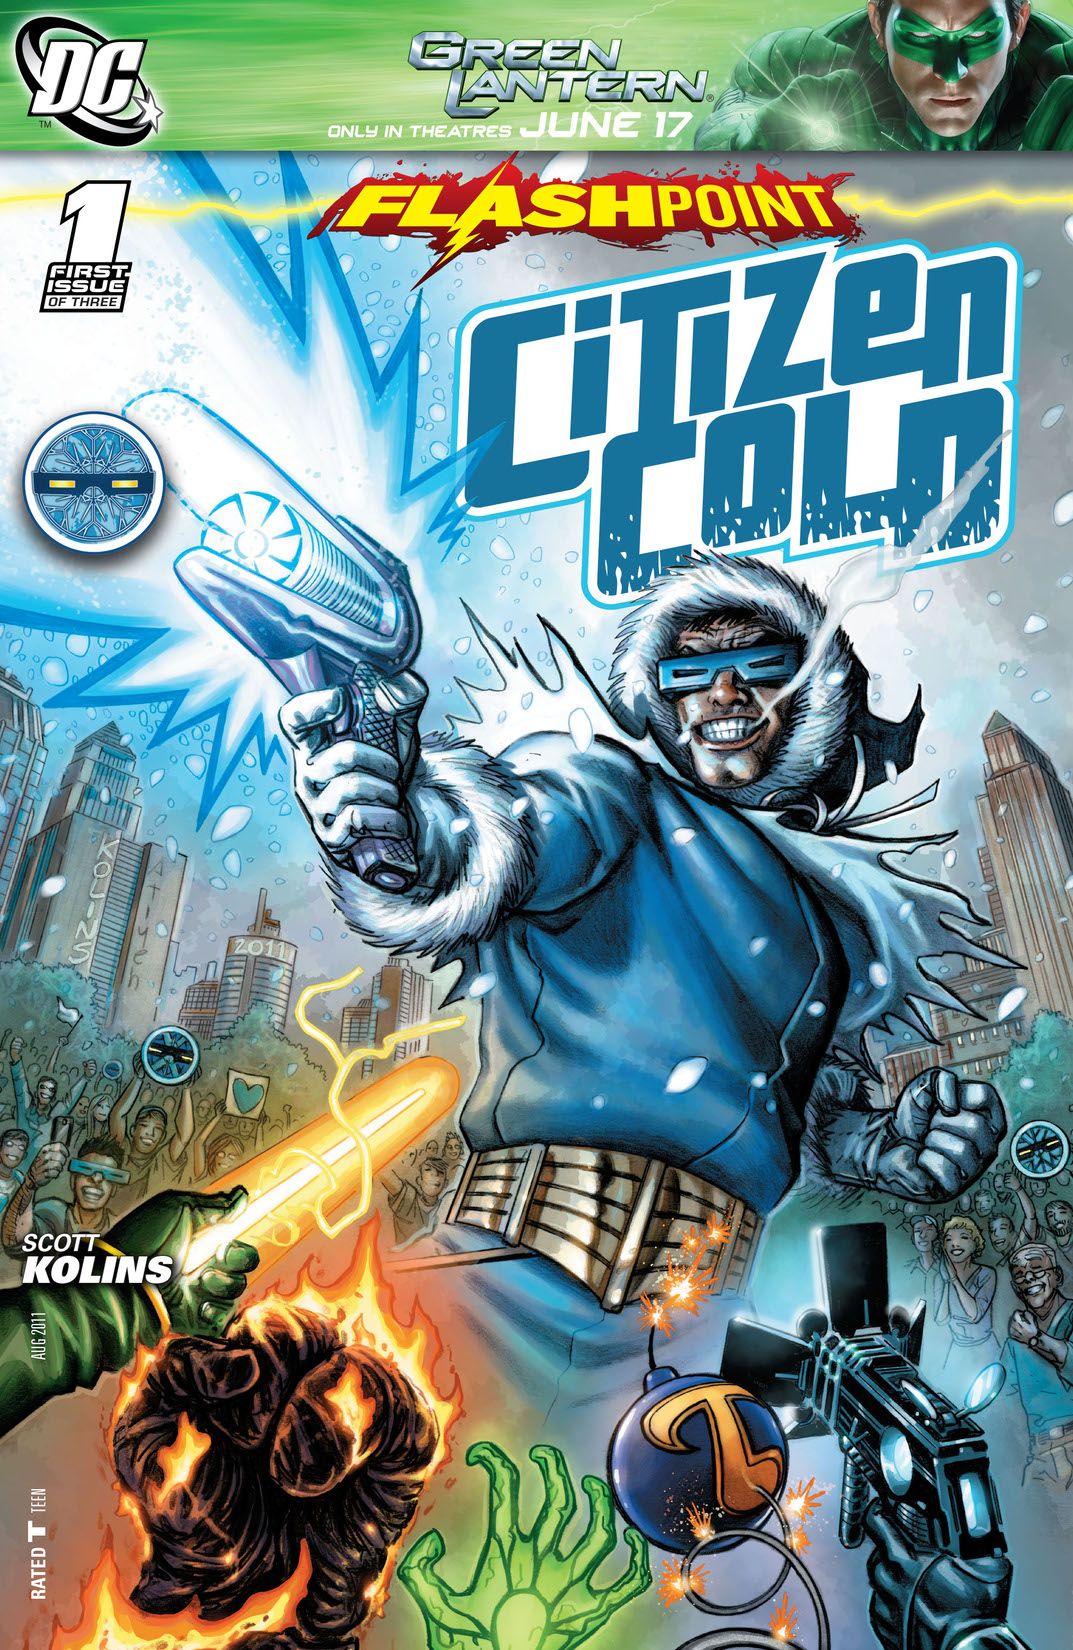 Flashpoint: Citizen Cold #1 preview images